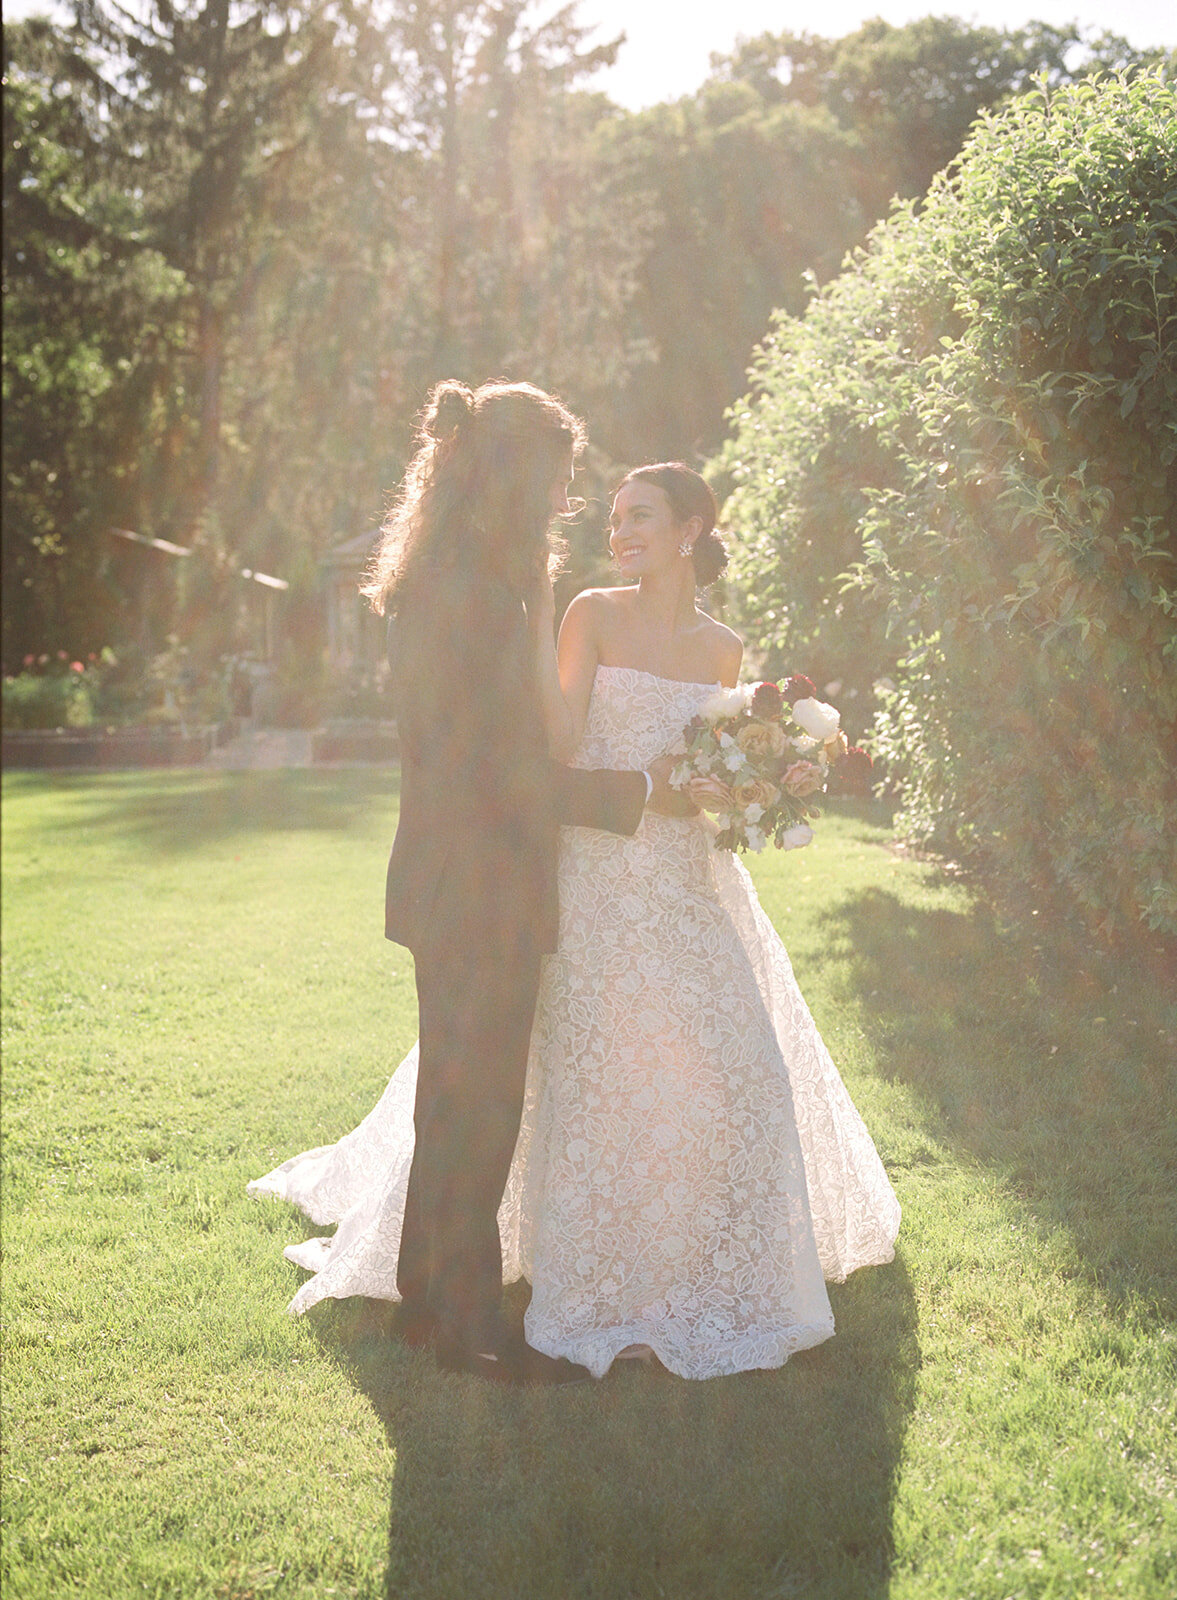 Greencrest Manor - Battle Creek Michigan Wedding Venues - Stephanie Michelle Photography - _stephaniemichellephotog4-R1-E017